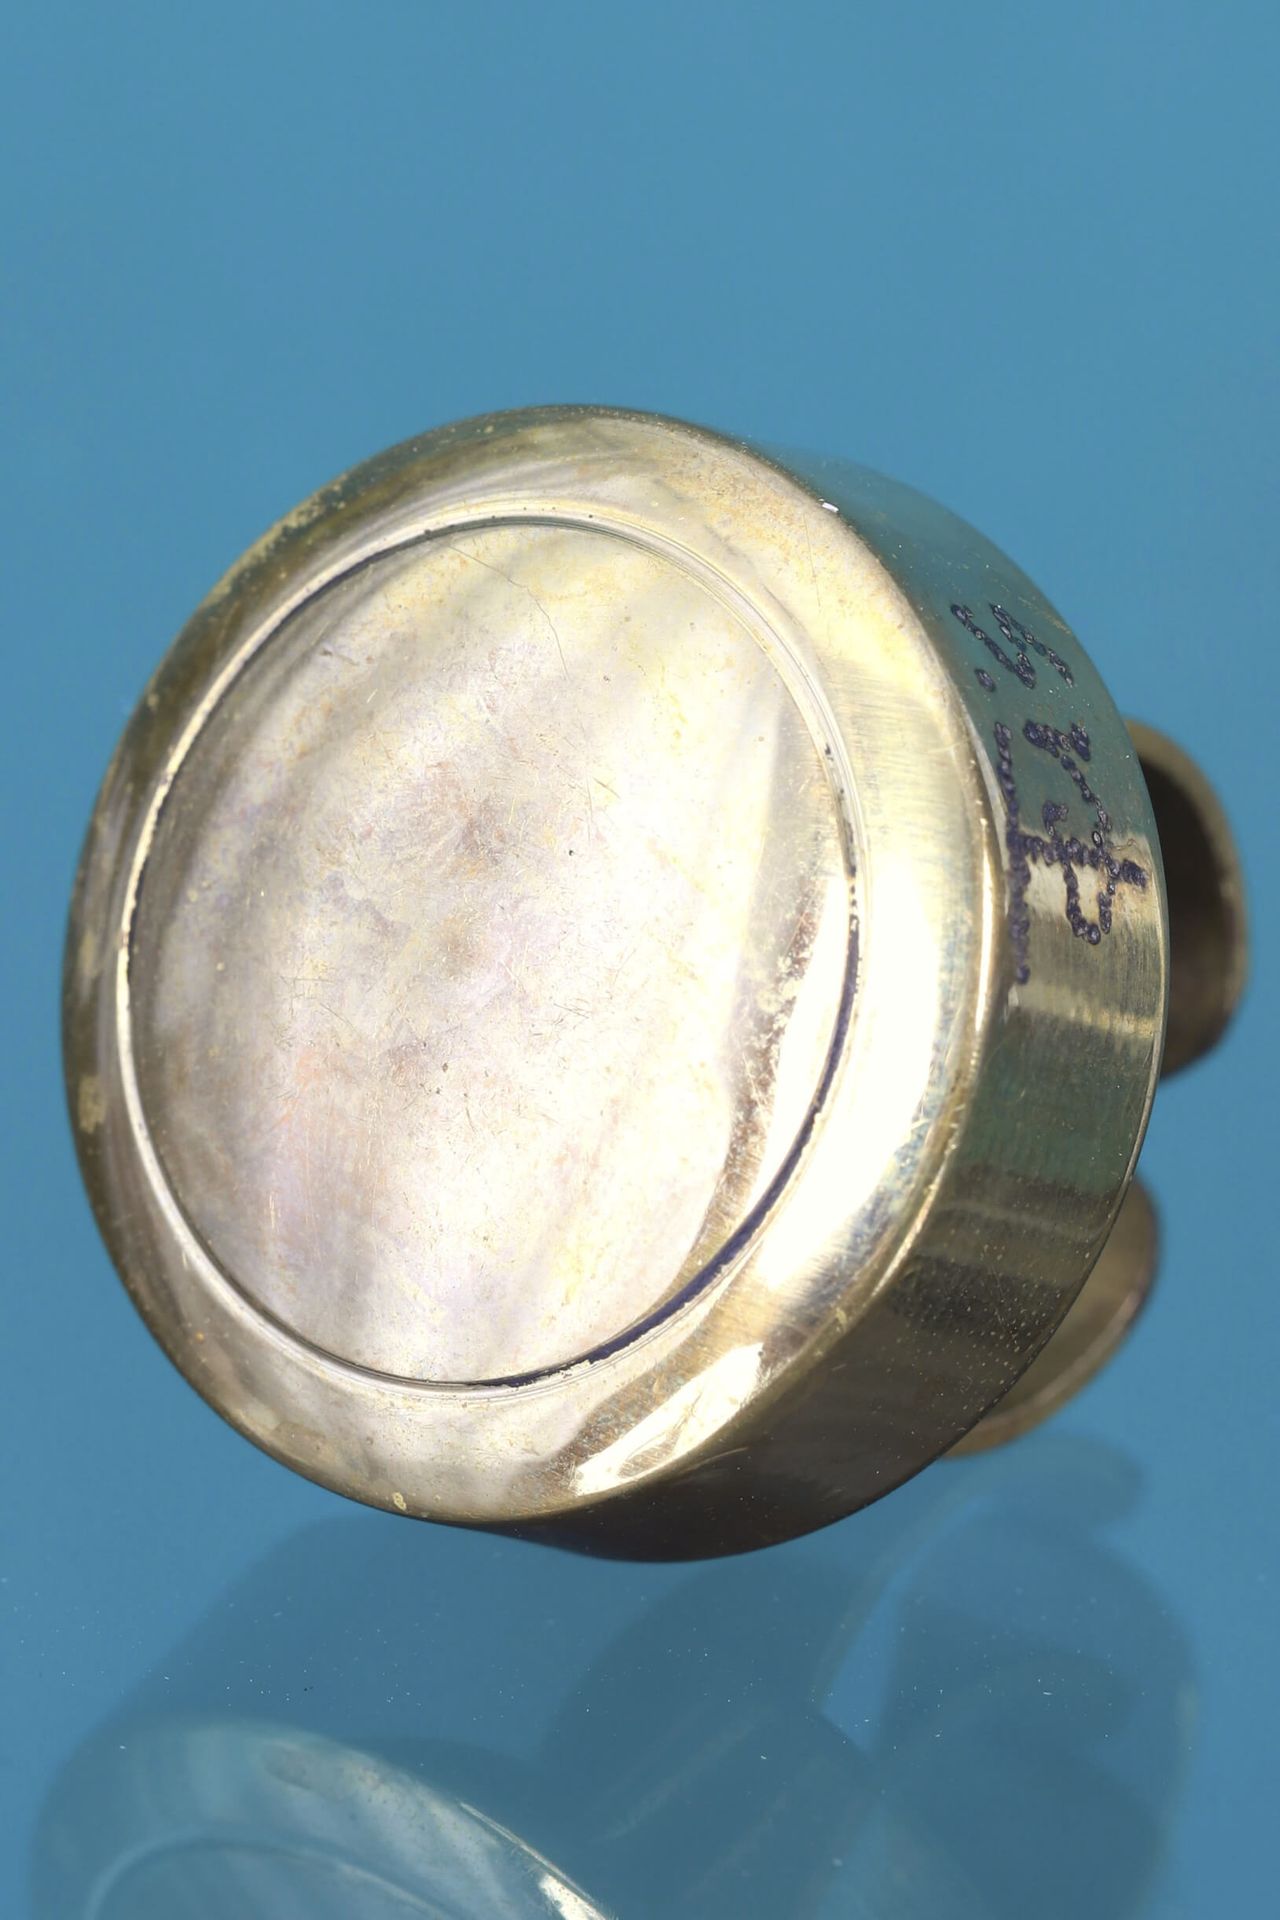 Takis (1925-2019) 签署的黄铜戒指

指头大小 55 D. 3 cm 出处： > 私人收藏，雅典

状况报告：氧化变质